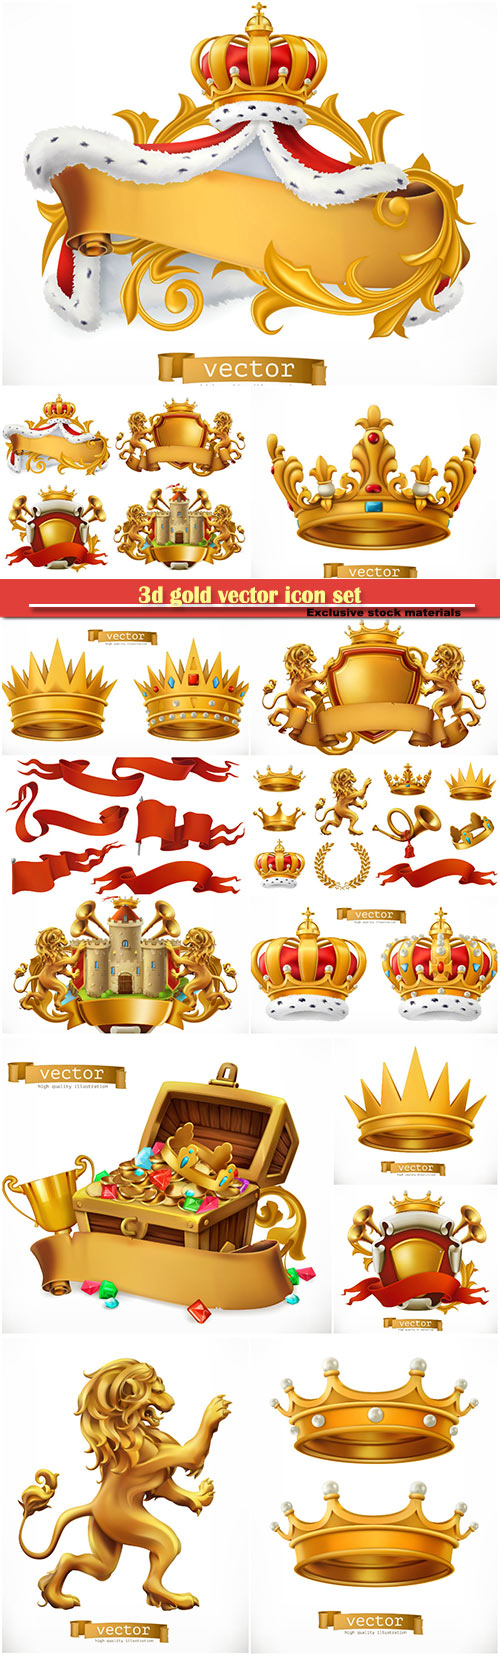 3d gold vector icon set, crown of the king, laurel wreath, trumpet, lion, r ...